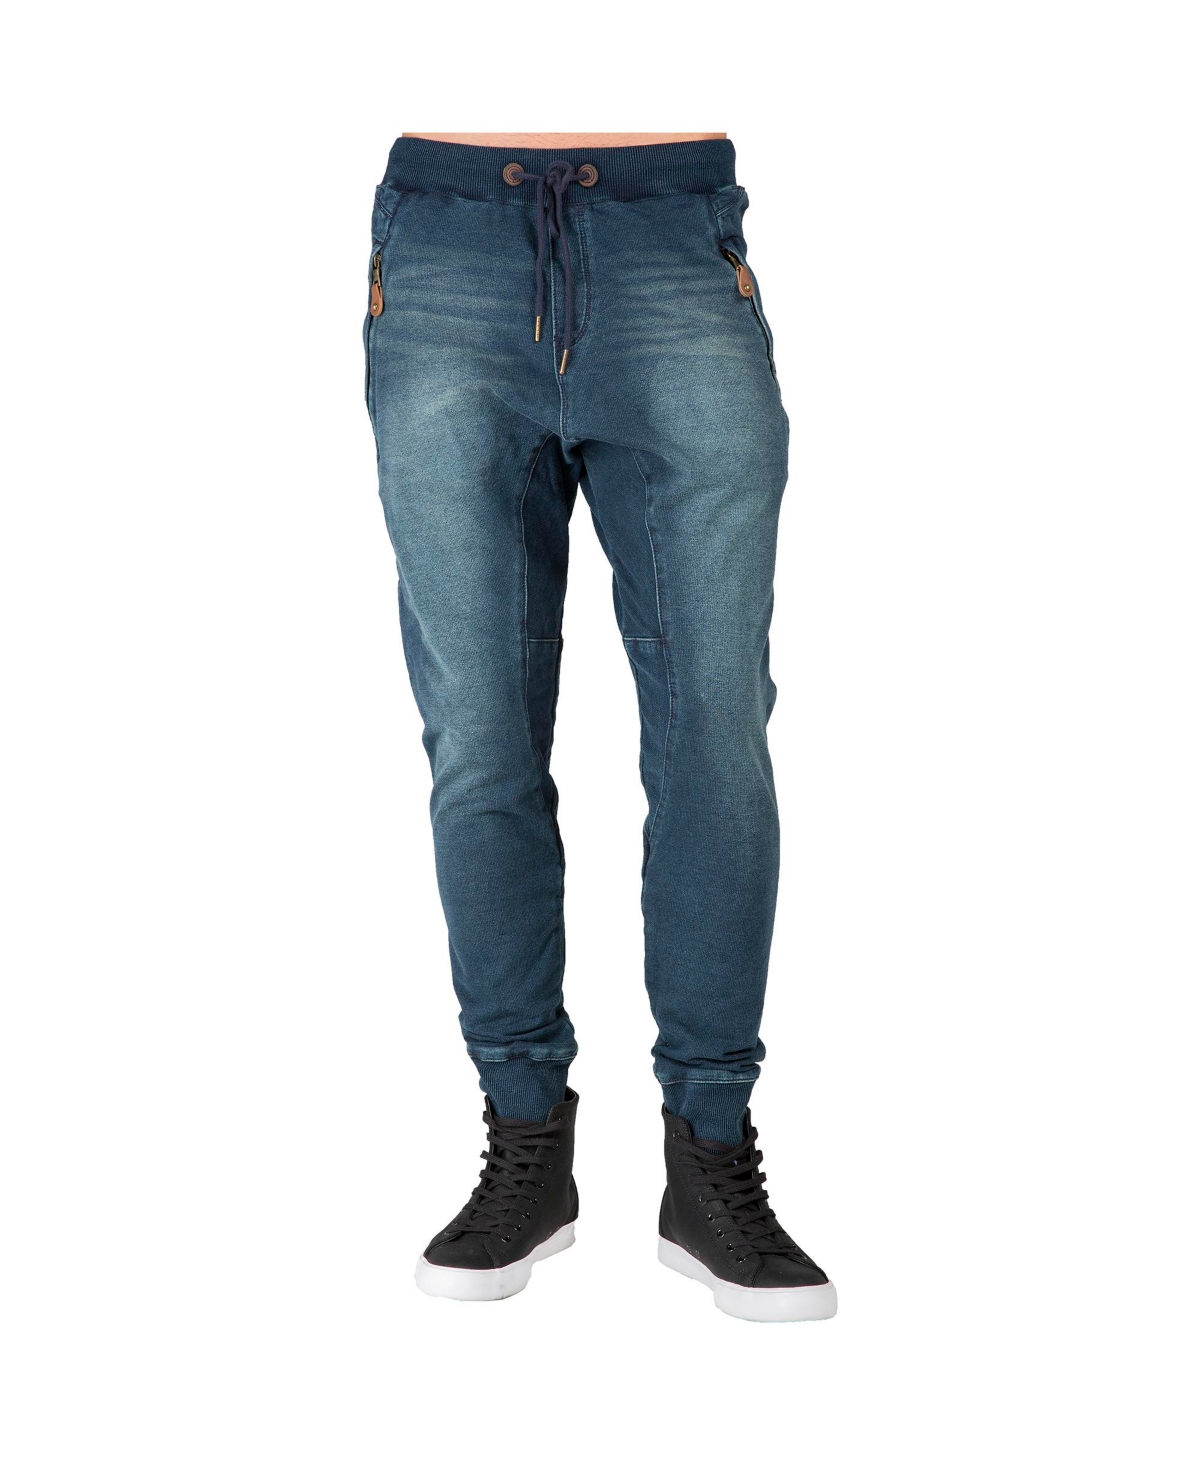 Men's Premium Knit Denim Jogger Jeans Drop Crotch Whisker Zipper Pockets - Blue imperial